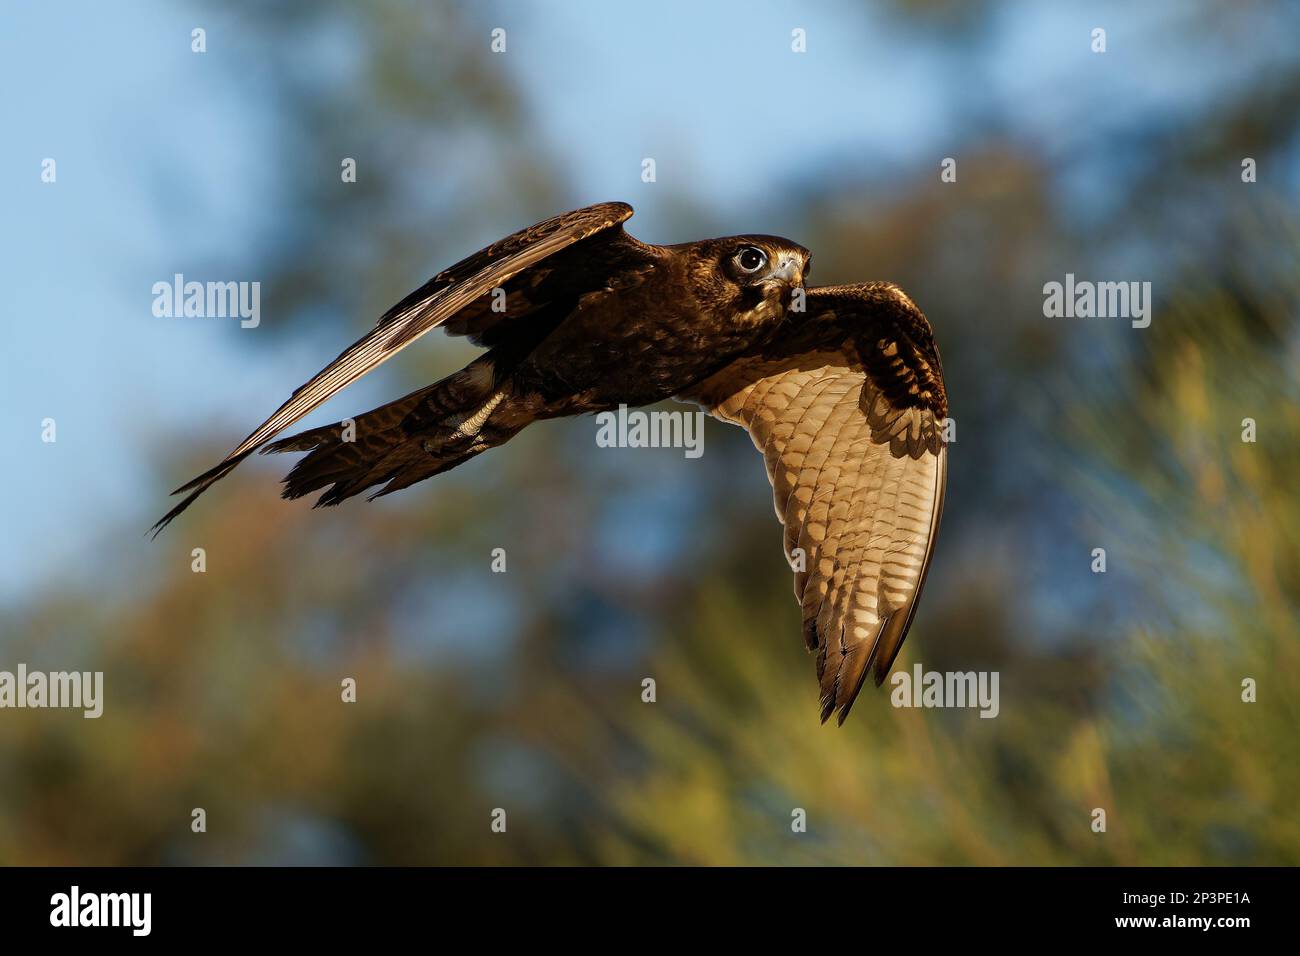 Black Falcon - Falco subniger medium-large falcon endemic to Australia, mainland states and territories, uniform dark brown to sooty black color, perc Stock Photo